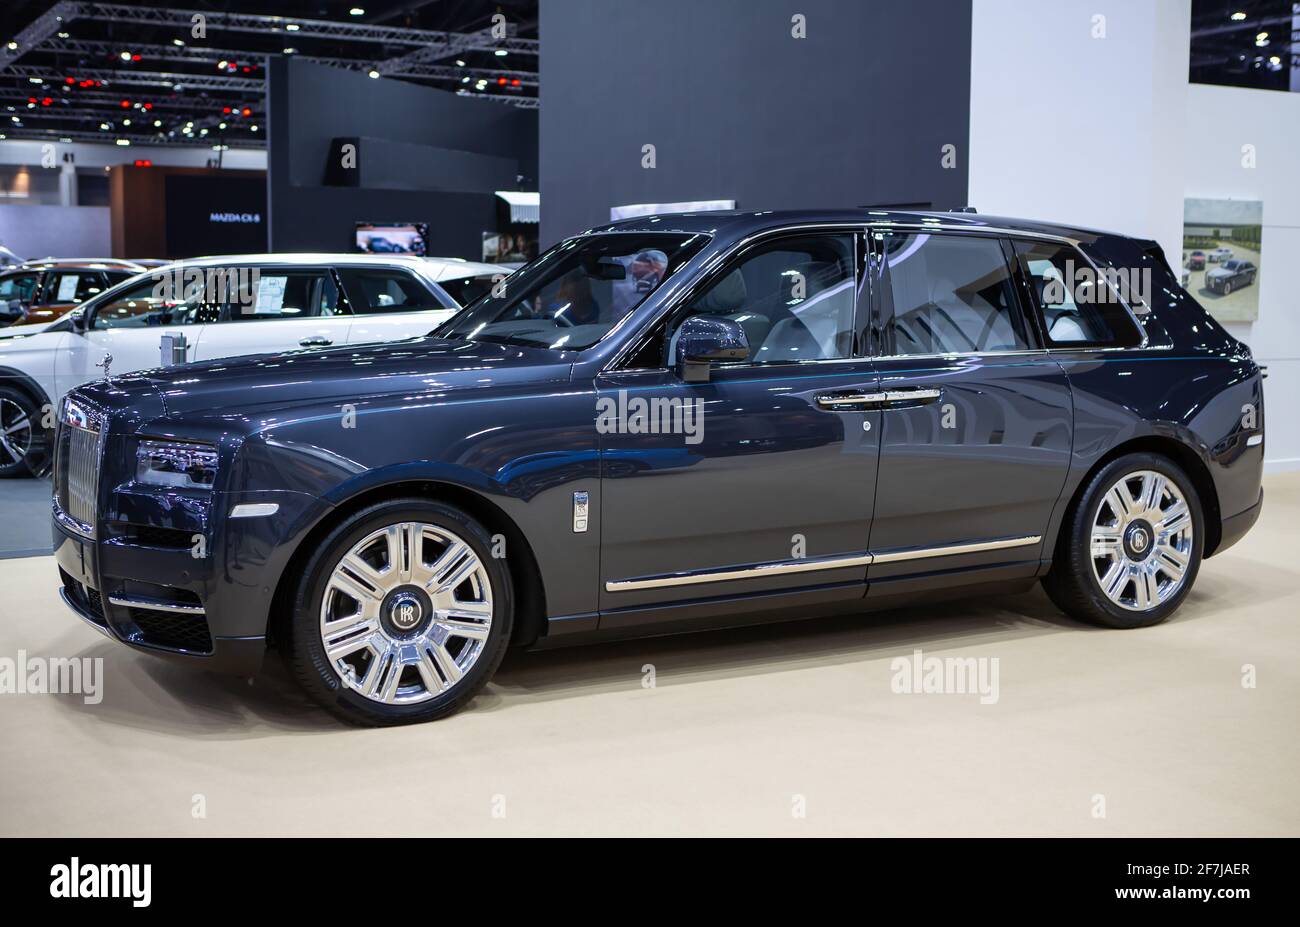 2021 Rolls Royce Cullinan - Limited Edition Luxury SUV by MANSORY 